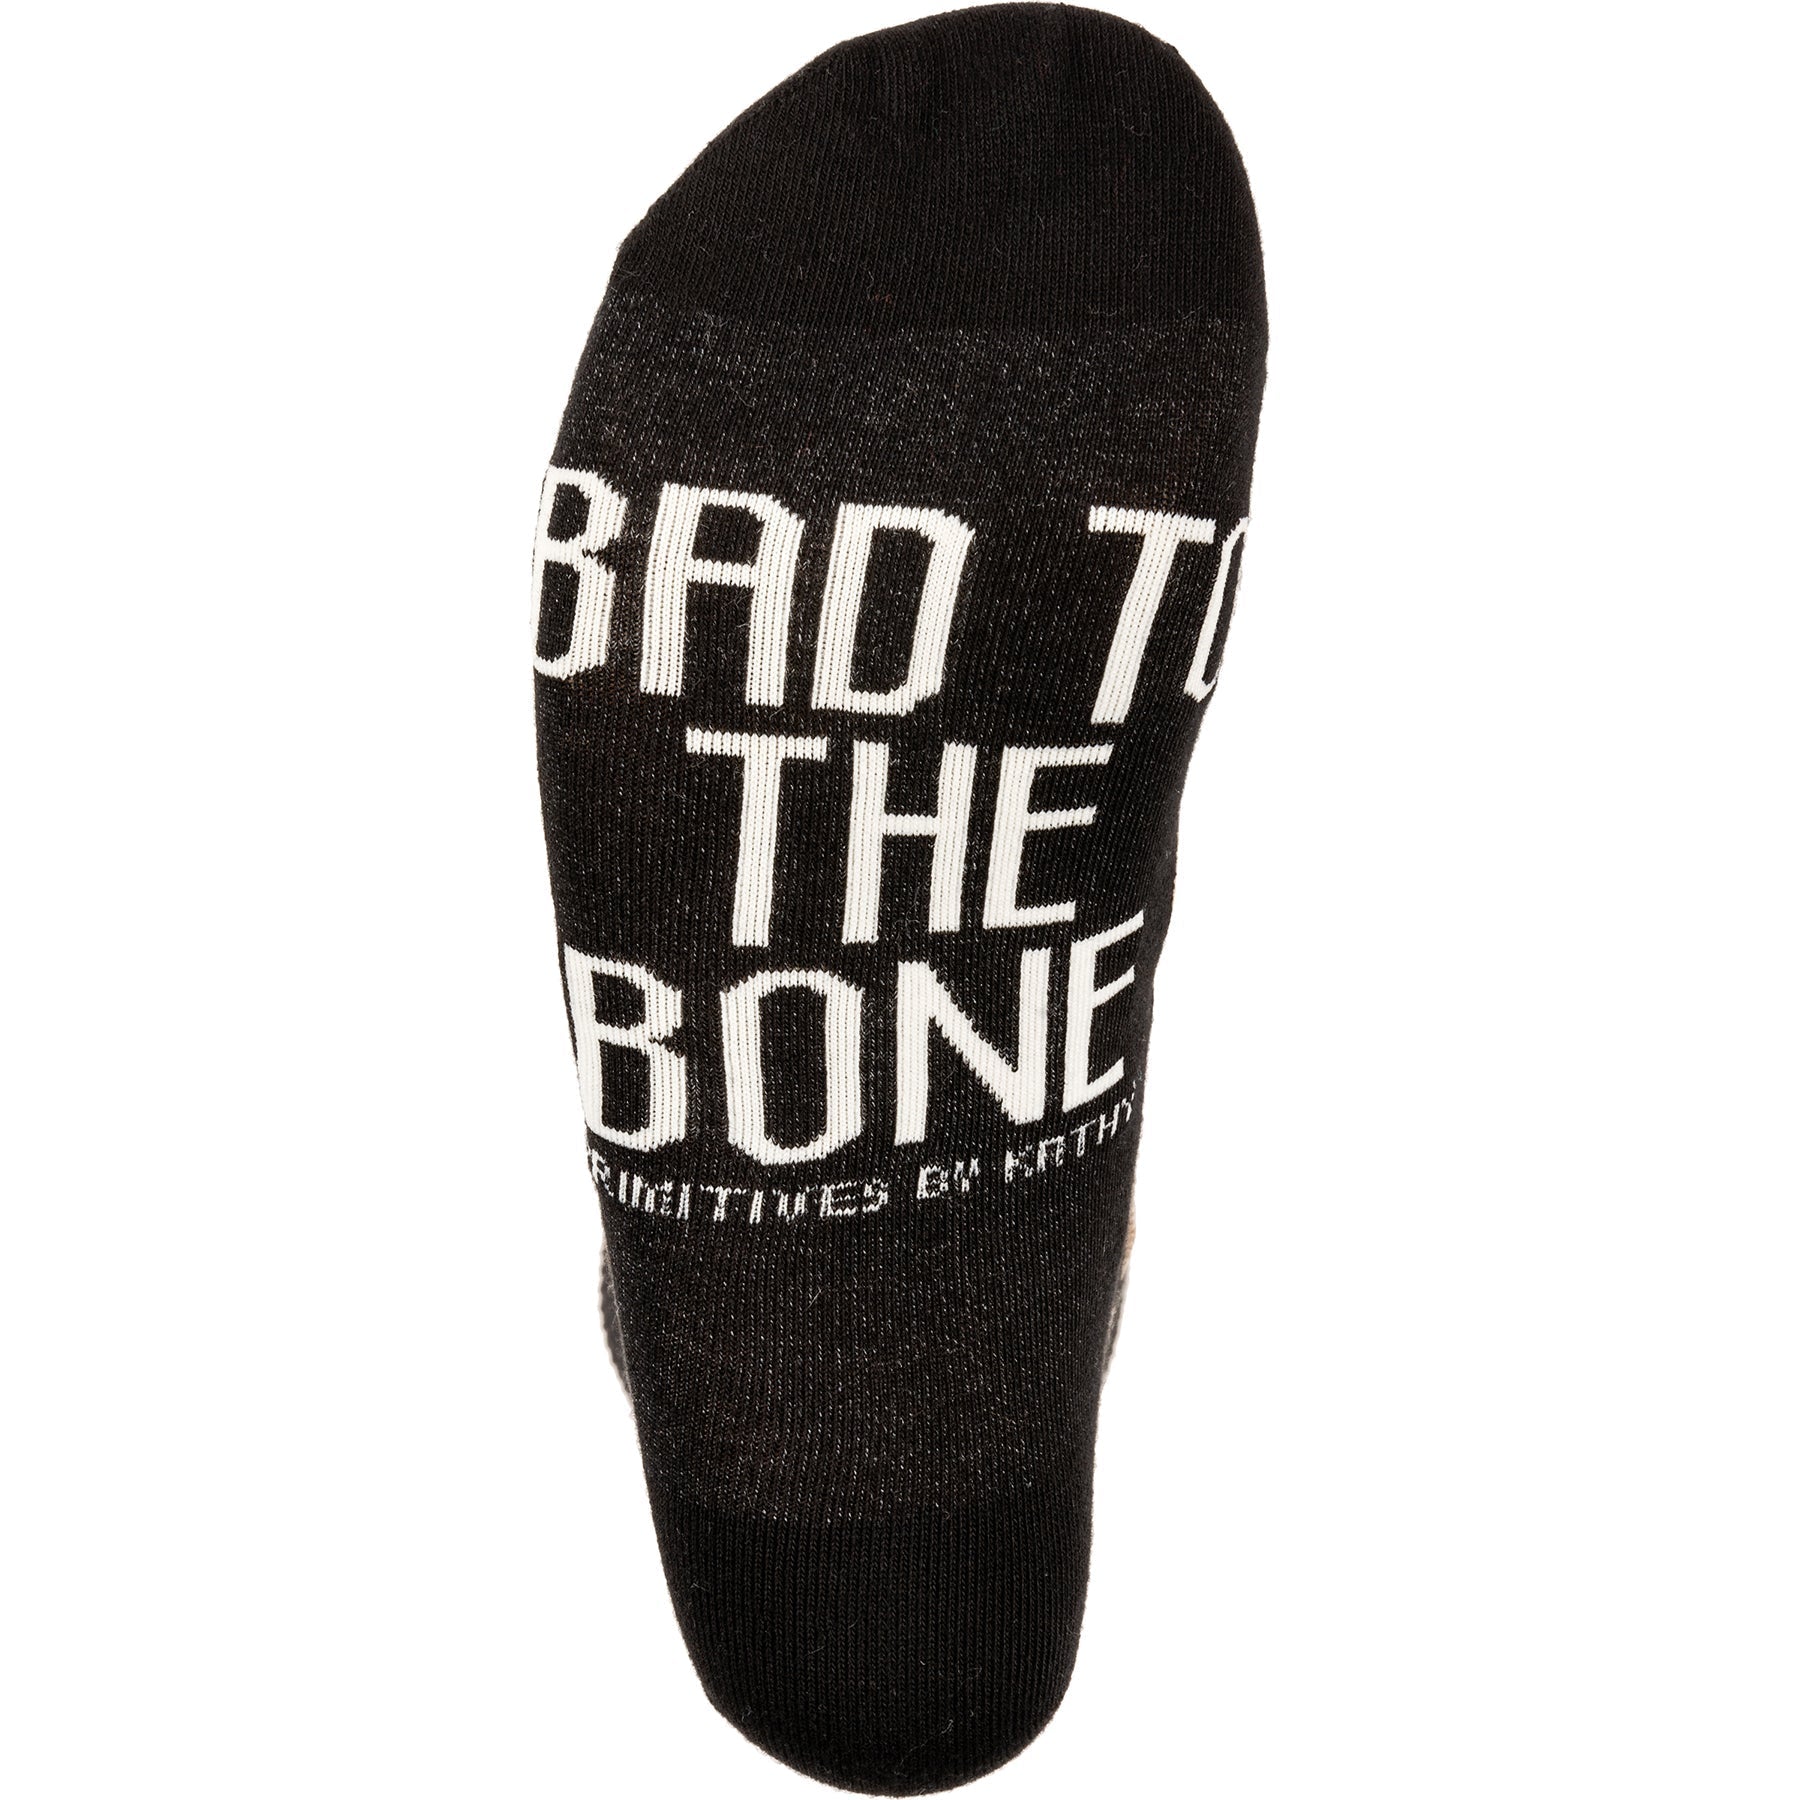 Bad To The Bone Socks in Skeleton Leg Designs | Fun Halloween Themed Novelty Socks